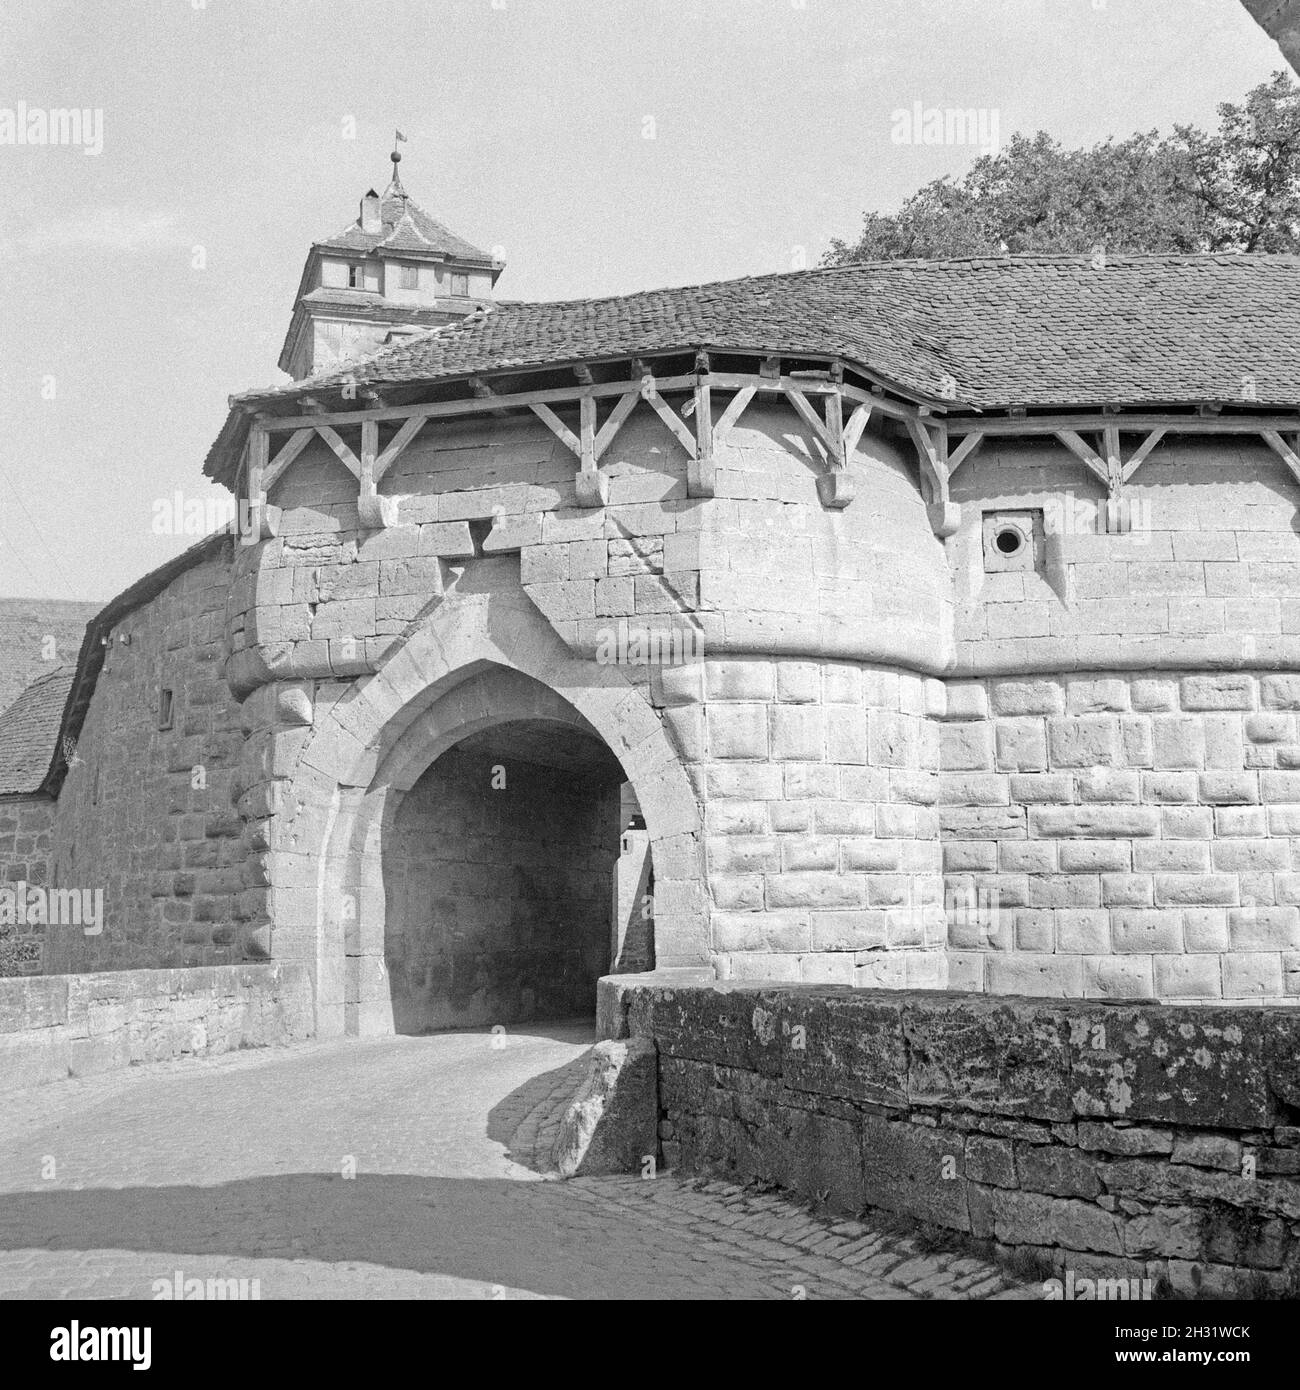 Historische Stadtmauer mit einem Tunnel als Zugang, Deutschland 1957. Historic city wall with a tunnel as an entrance, Germany 1957. Stock Photo